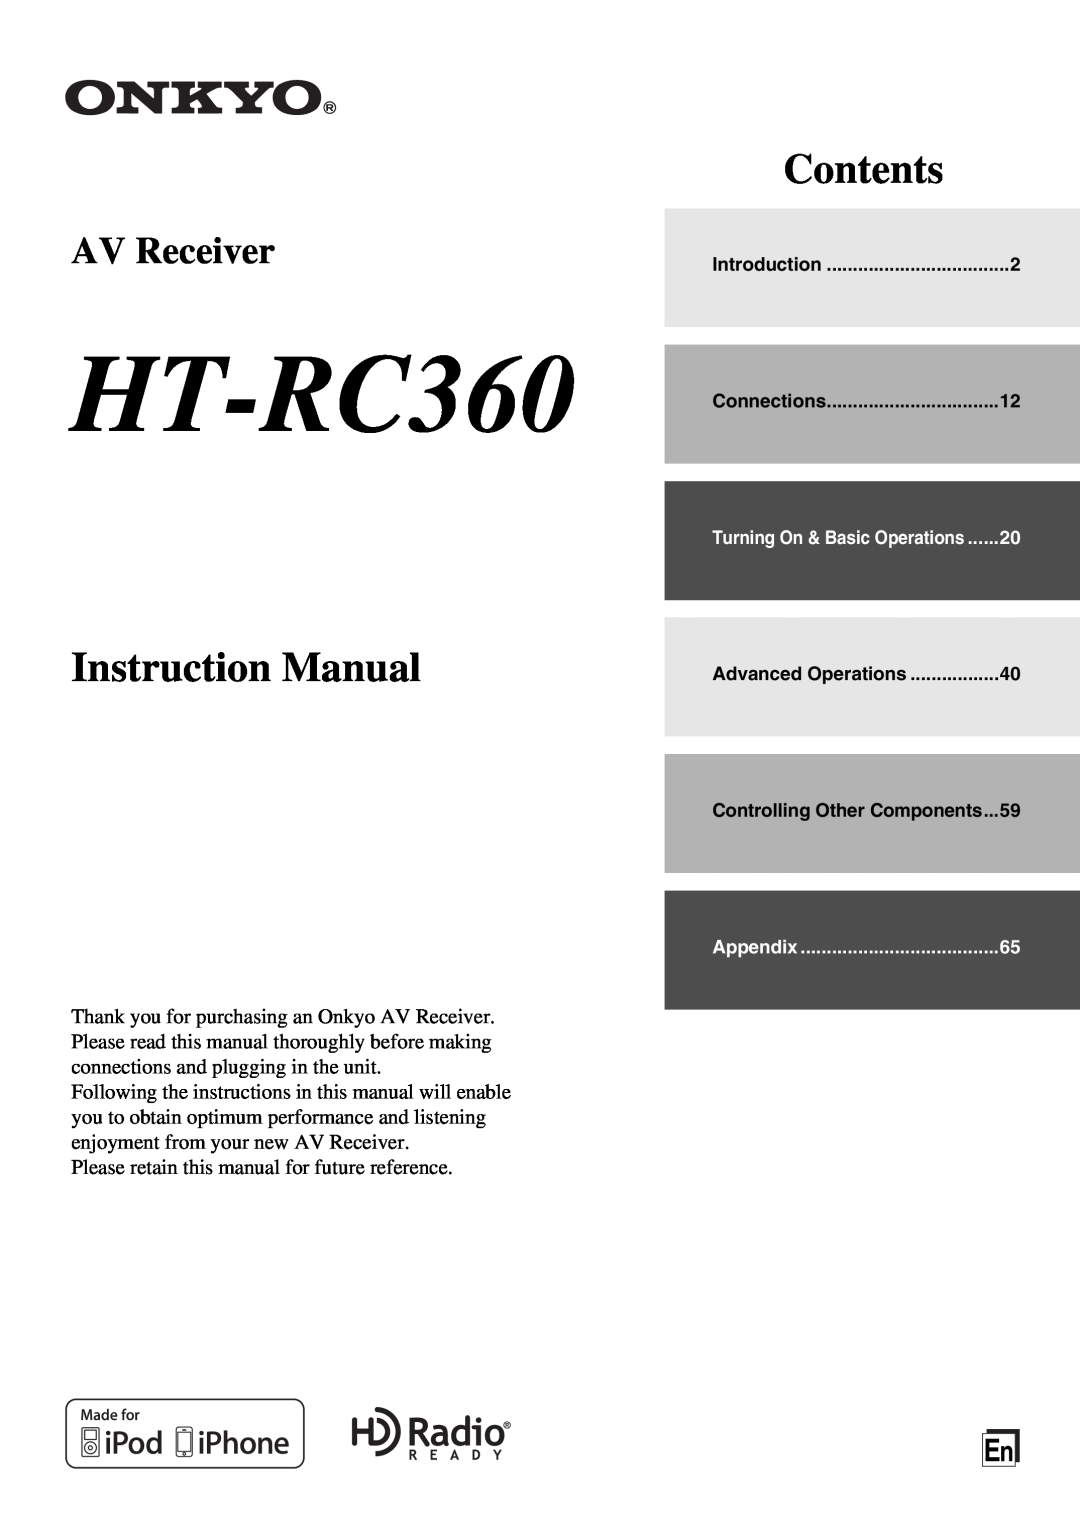 Onkyo HT-RC360 instruction manual Instruction Manual, Contents, AV Receiver 